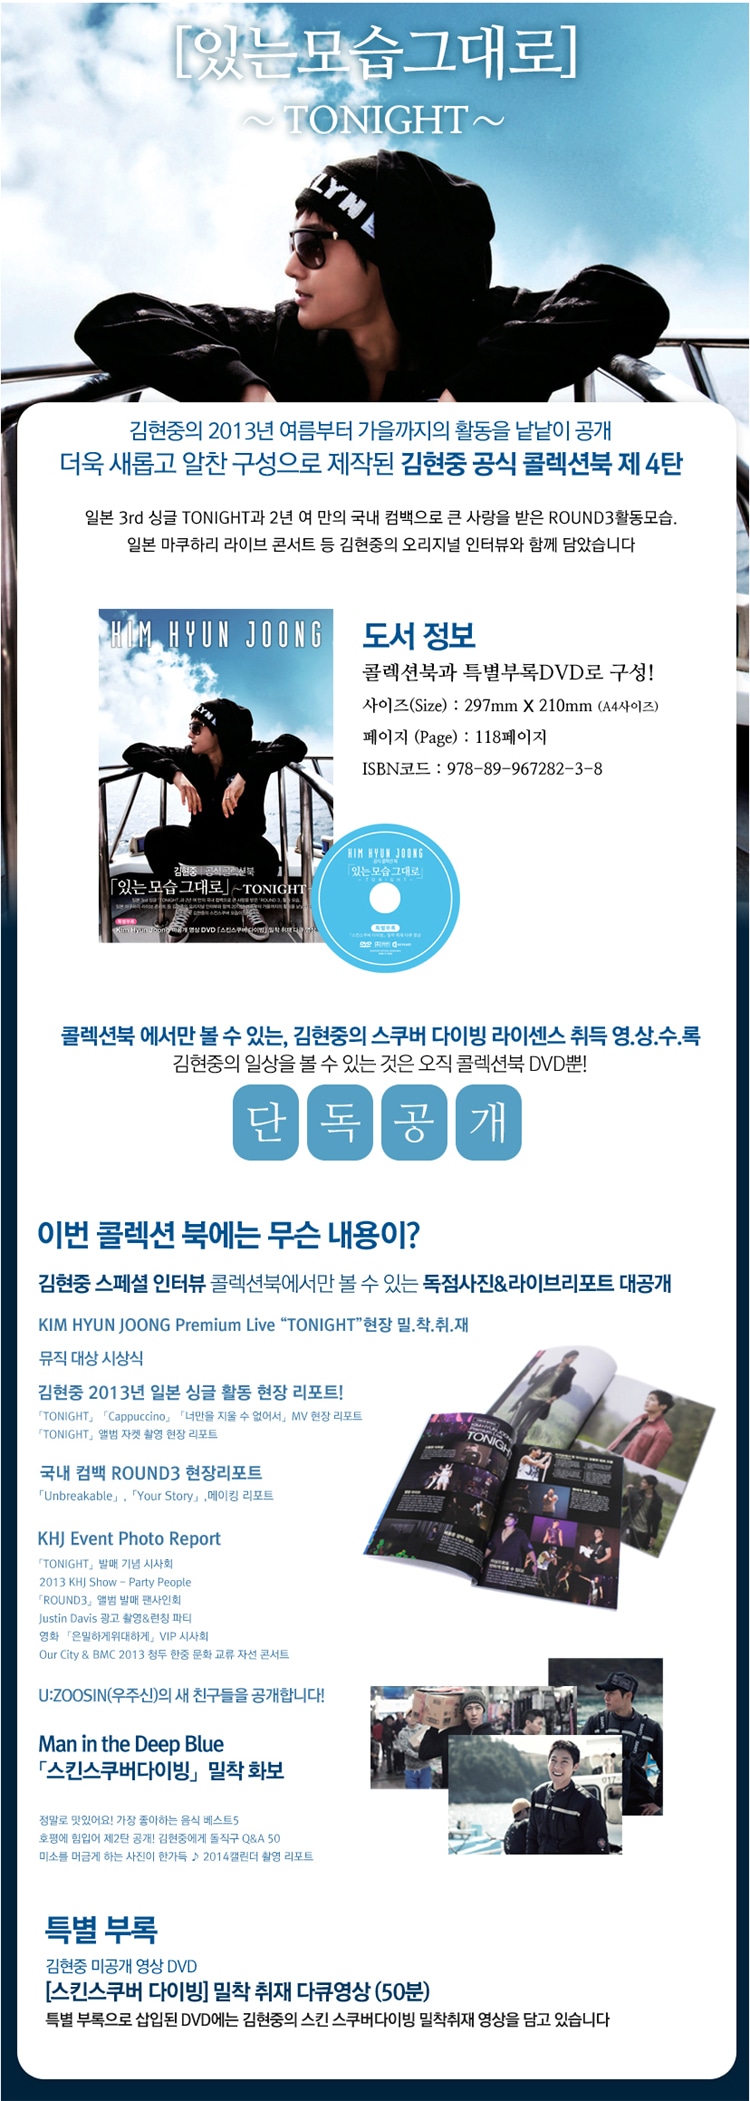 Kim Hyun Joong Official Collection Book 4. - TONIGHT -